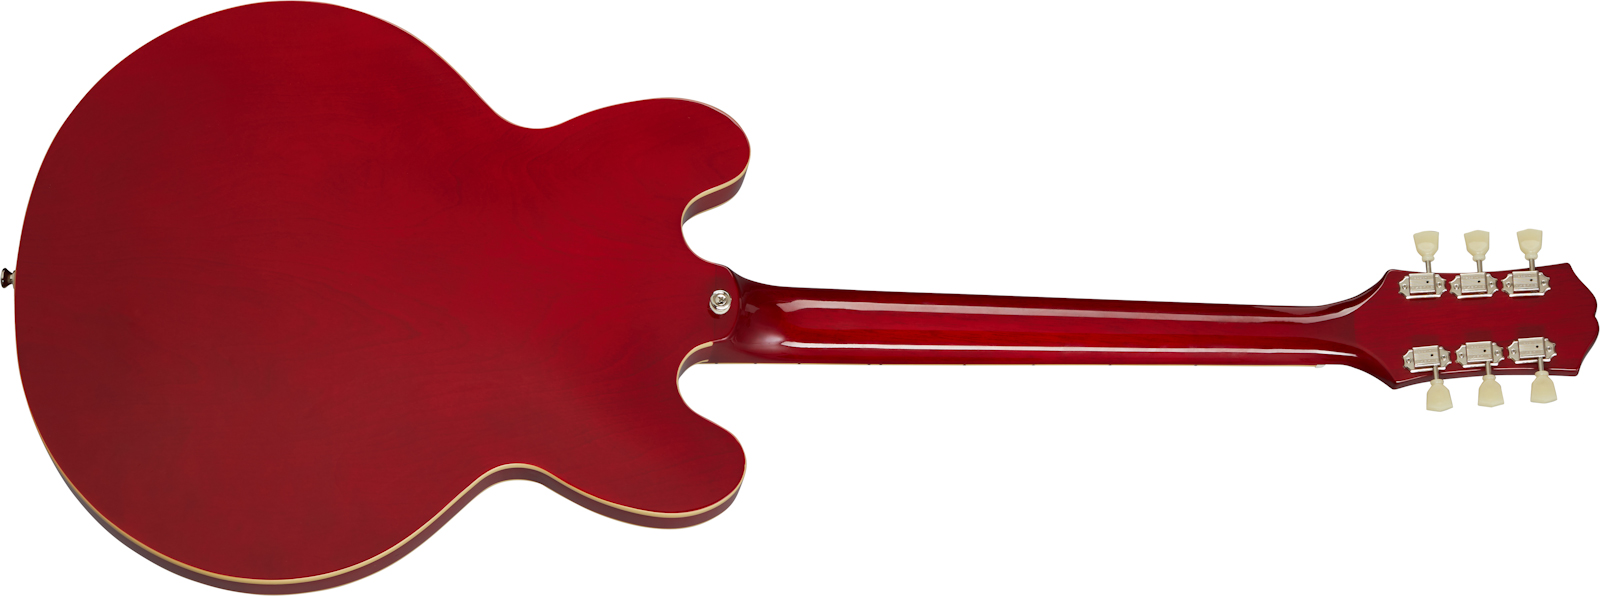 Epiphone Es-335 Inspired By Gibson Original 2h Ht Rw - Cherry - Semi hollow elektriche gitaar - Variation 1